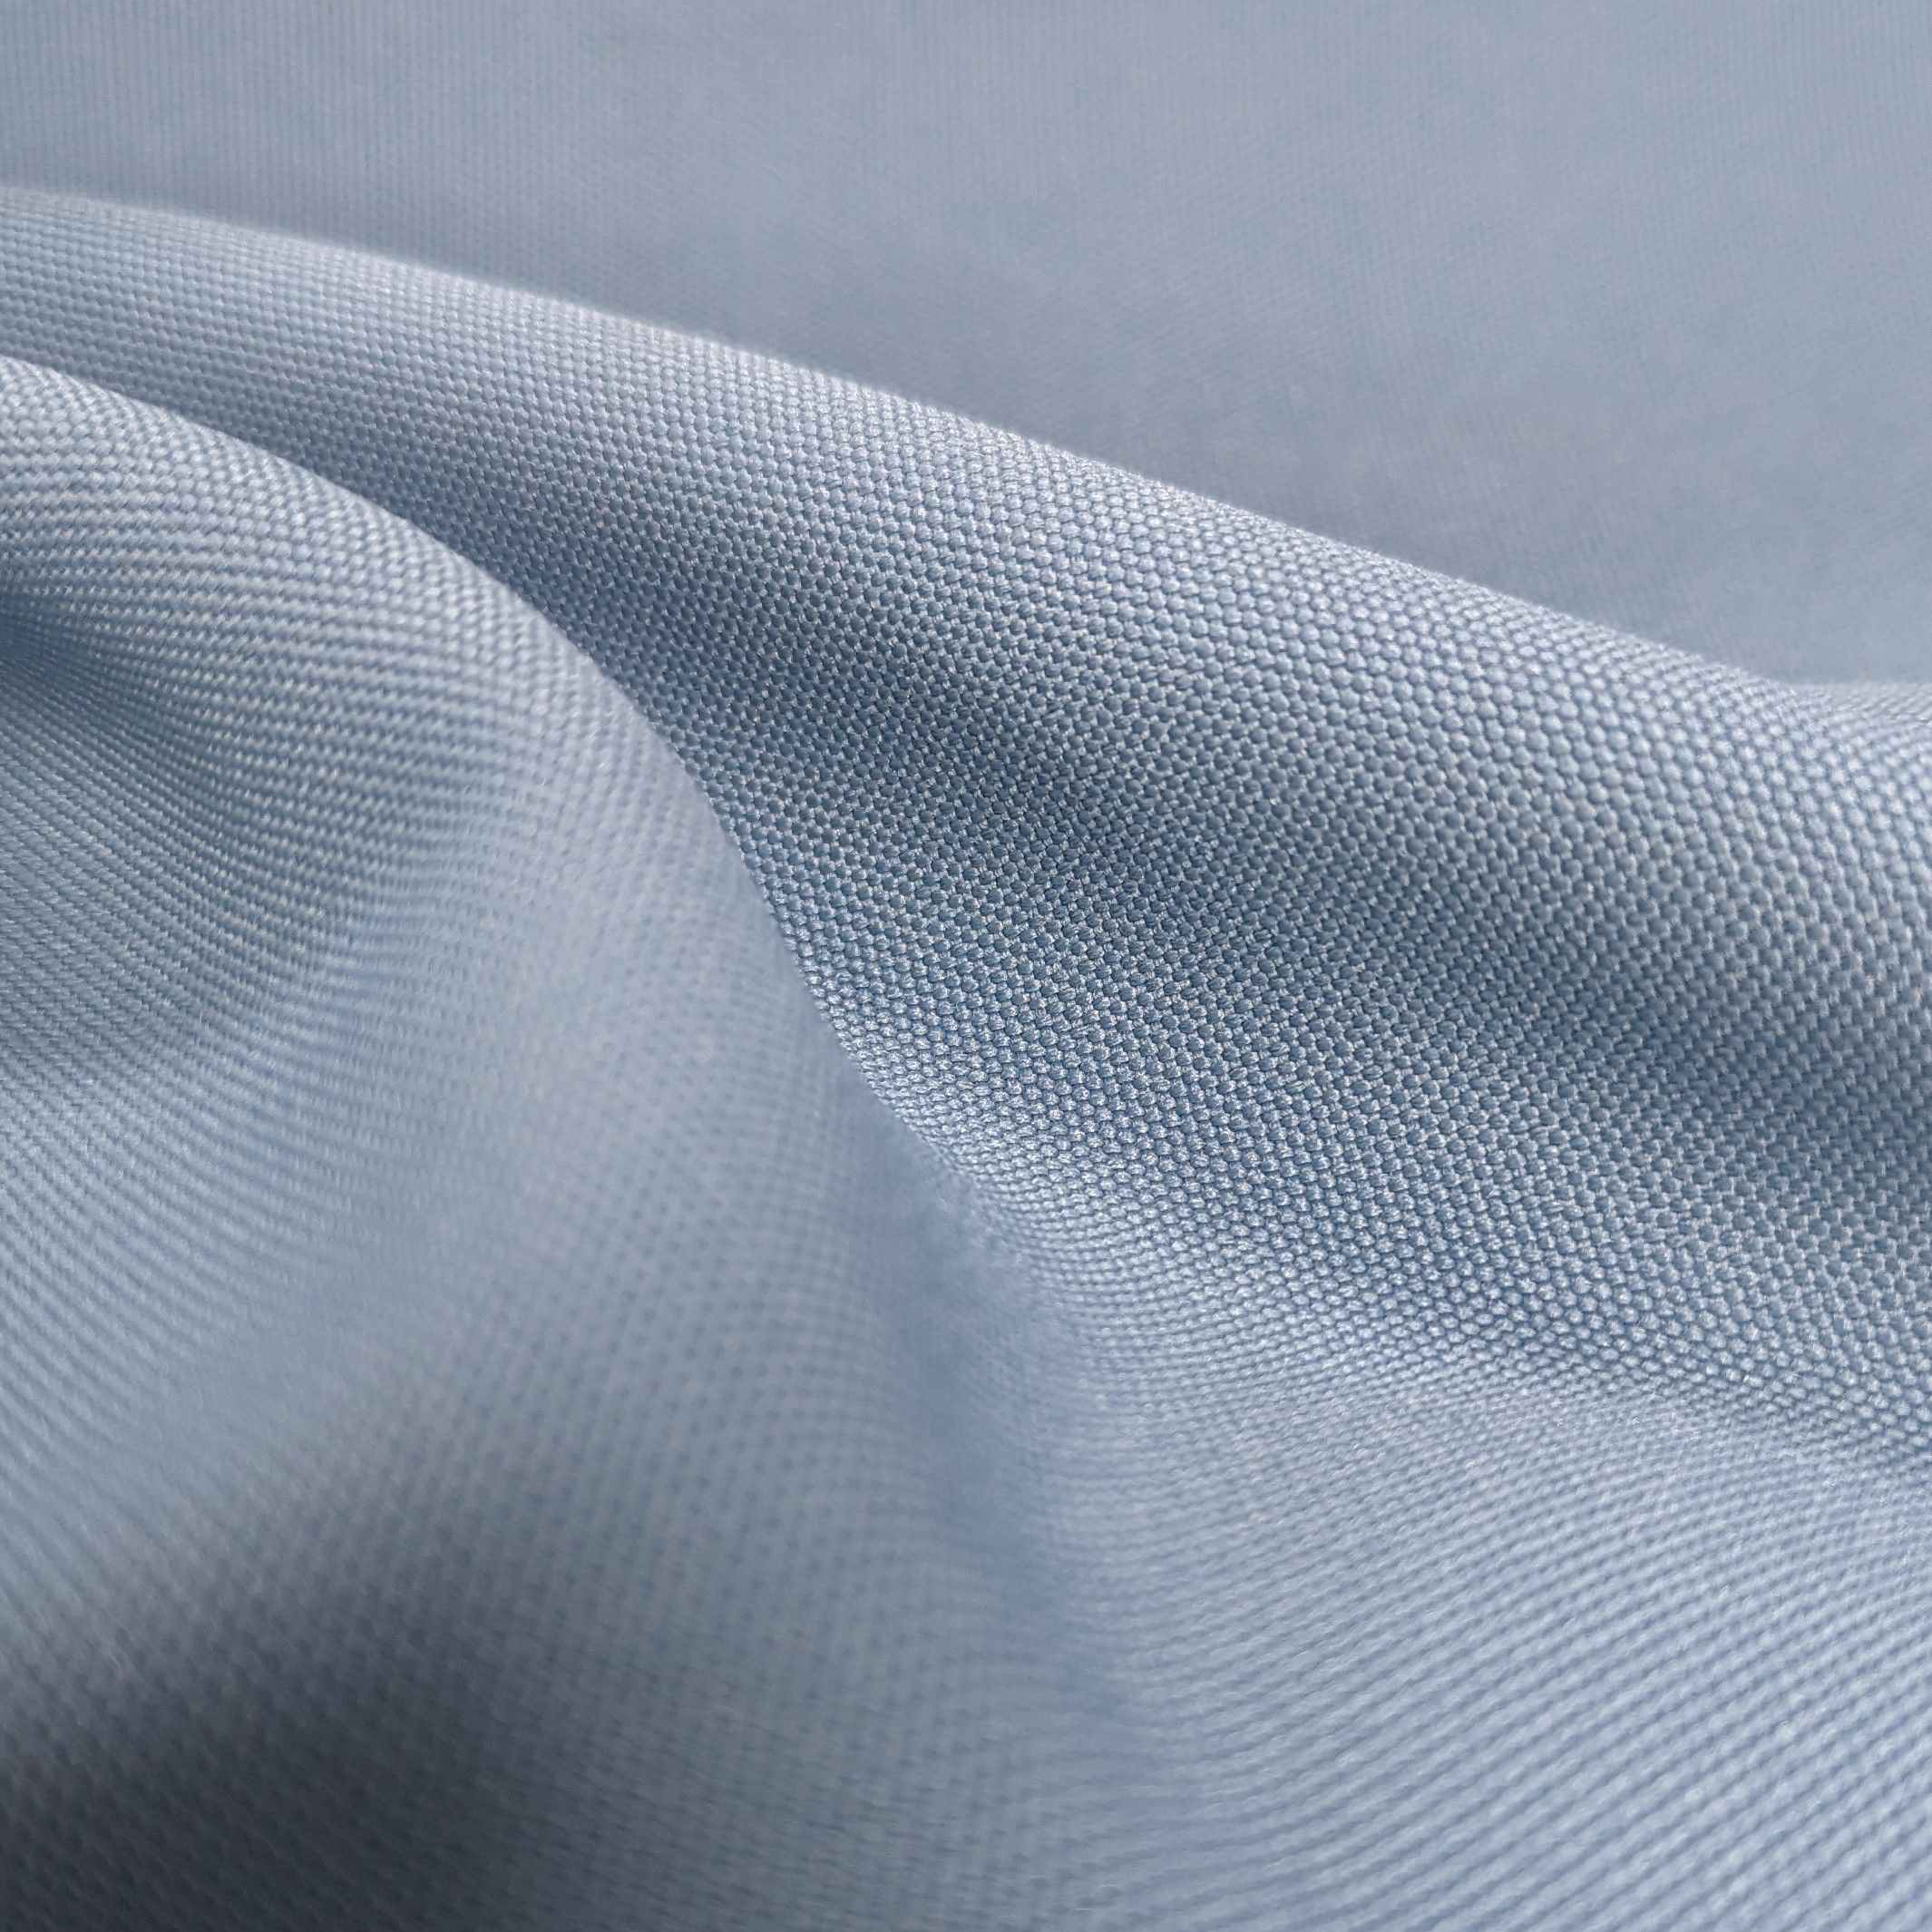 Polyester fabric basics